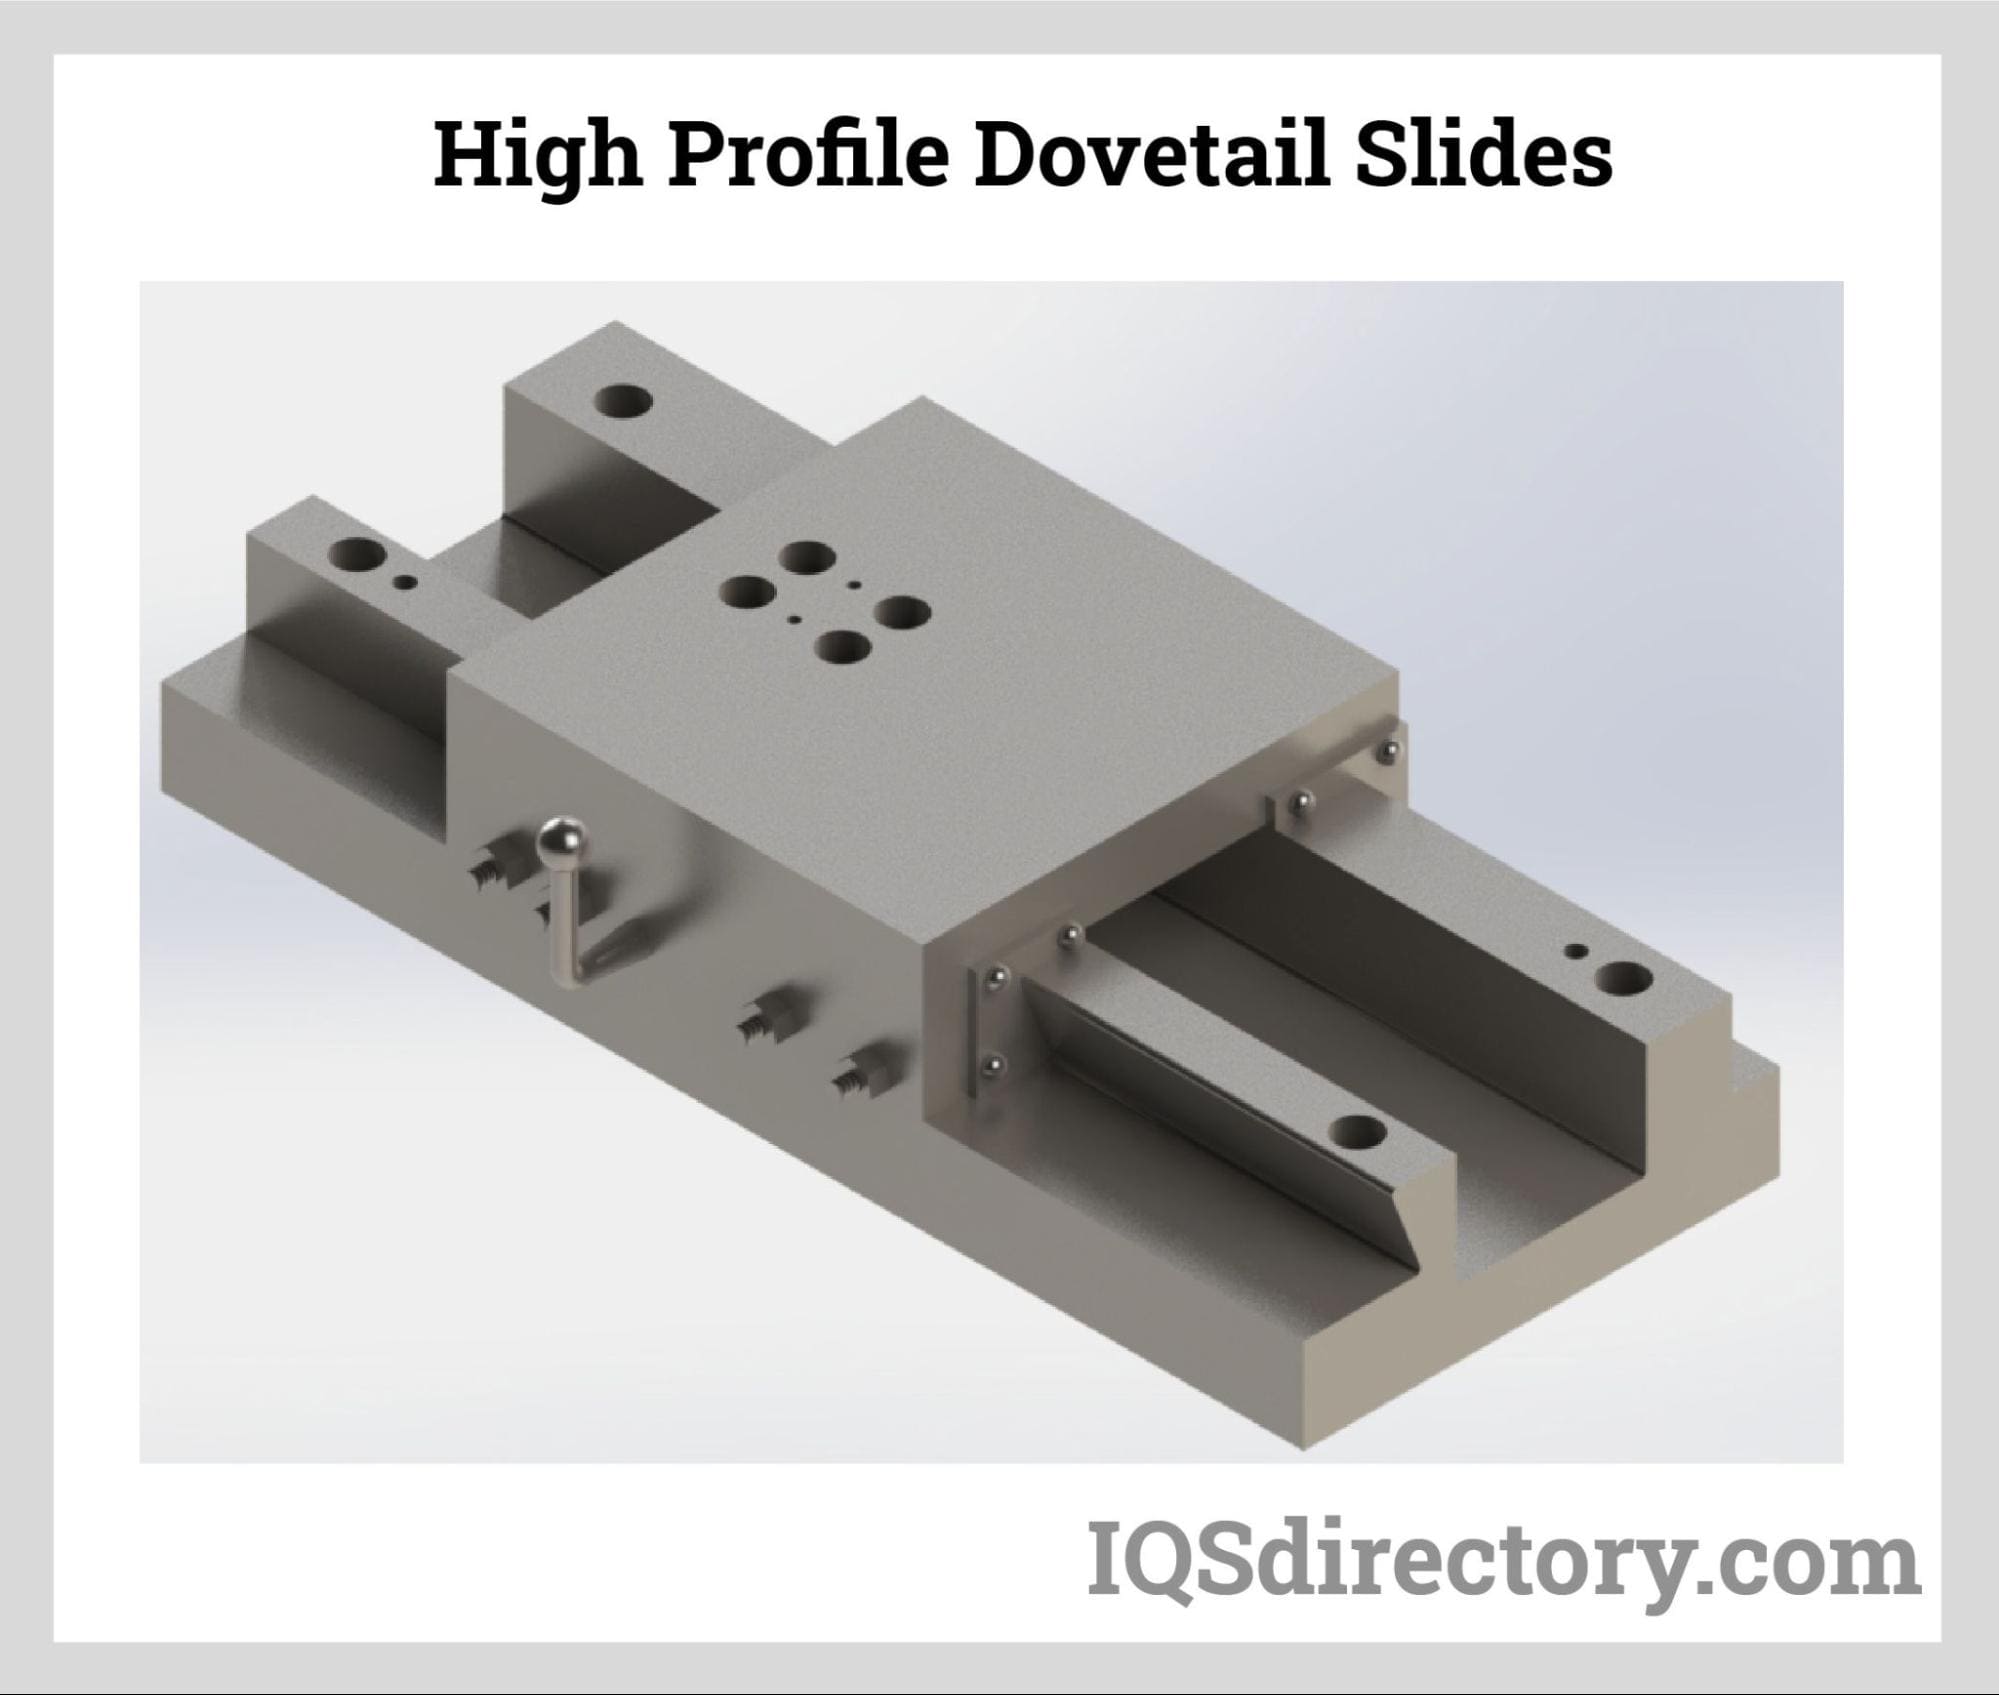 High-Profile Dovetail Slides